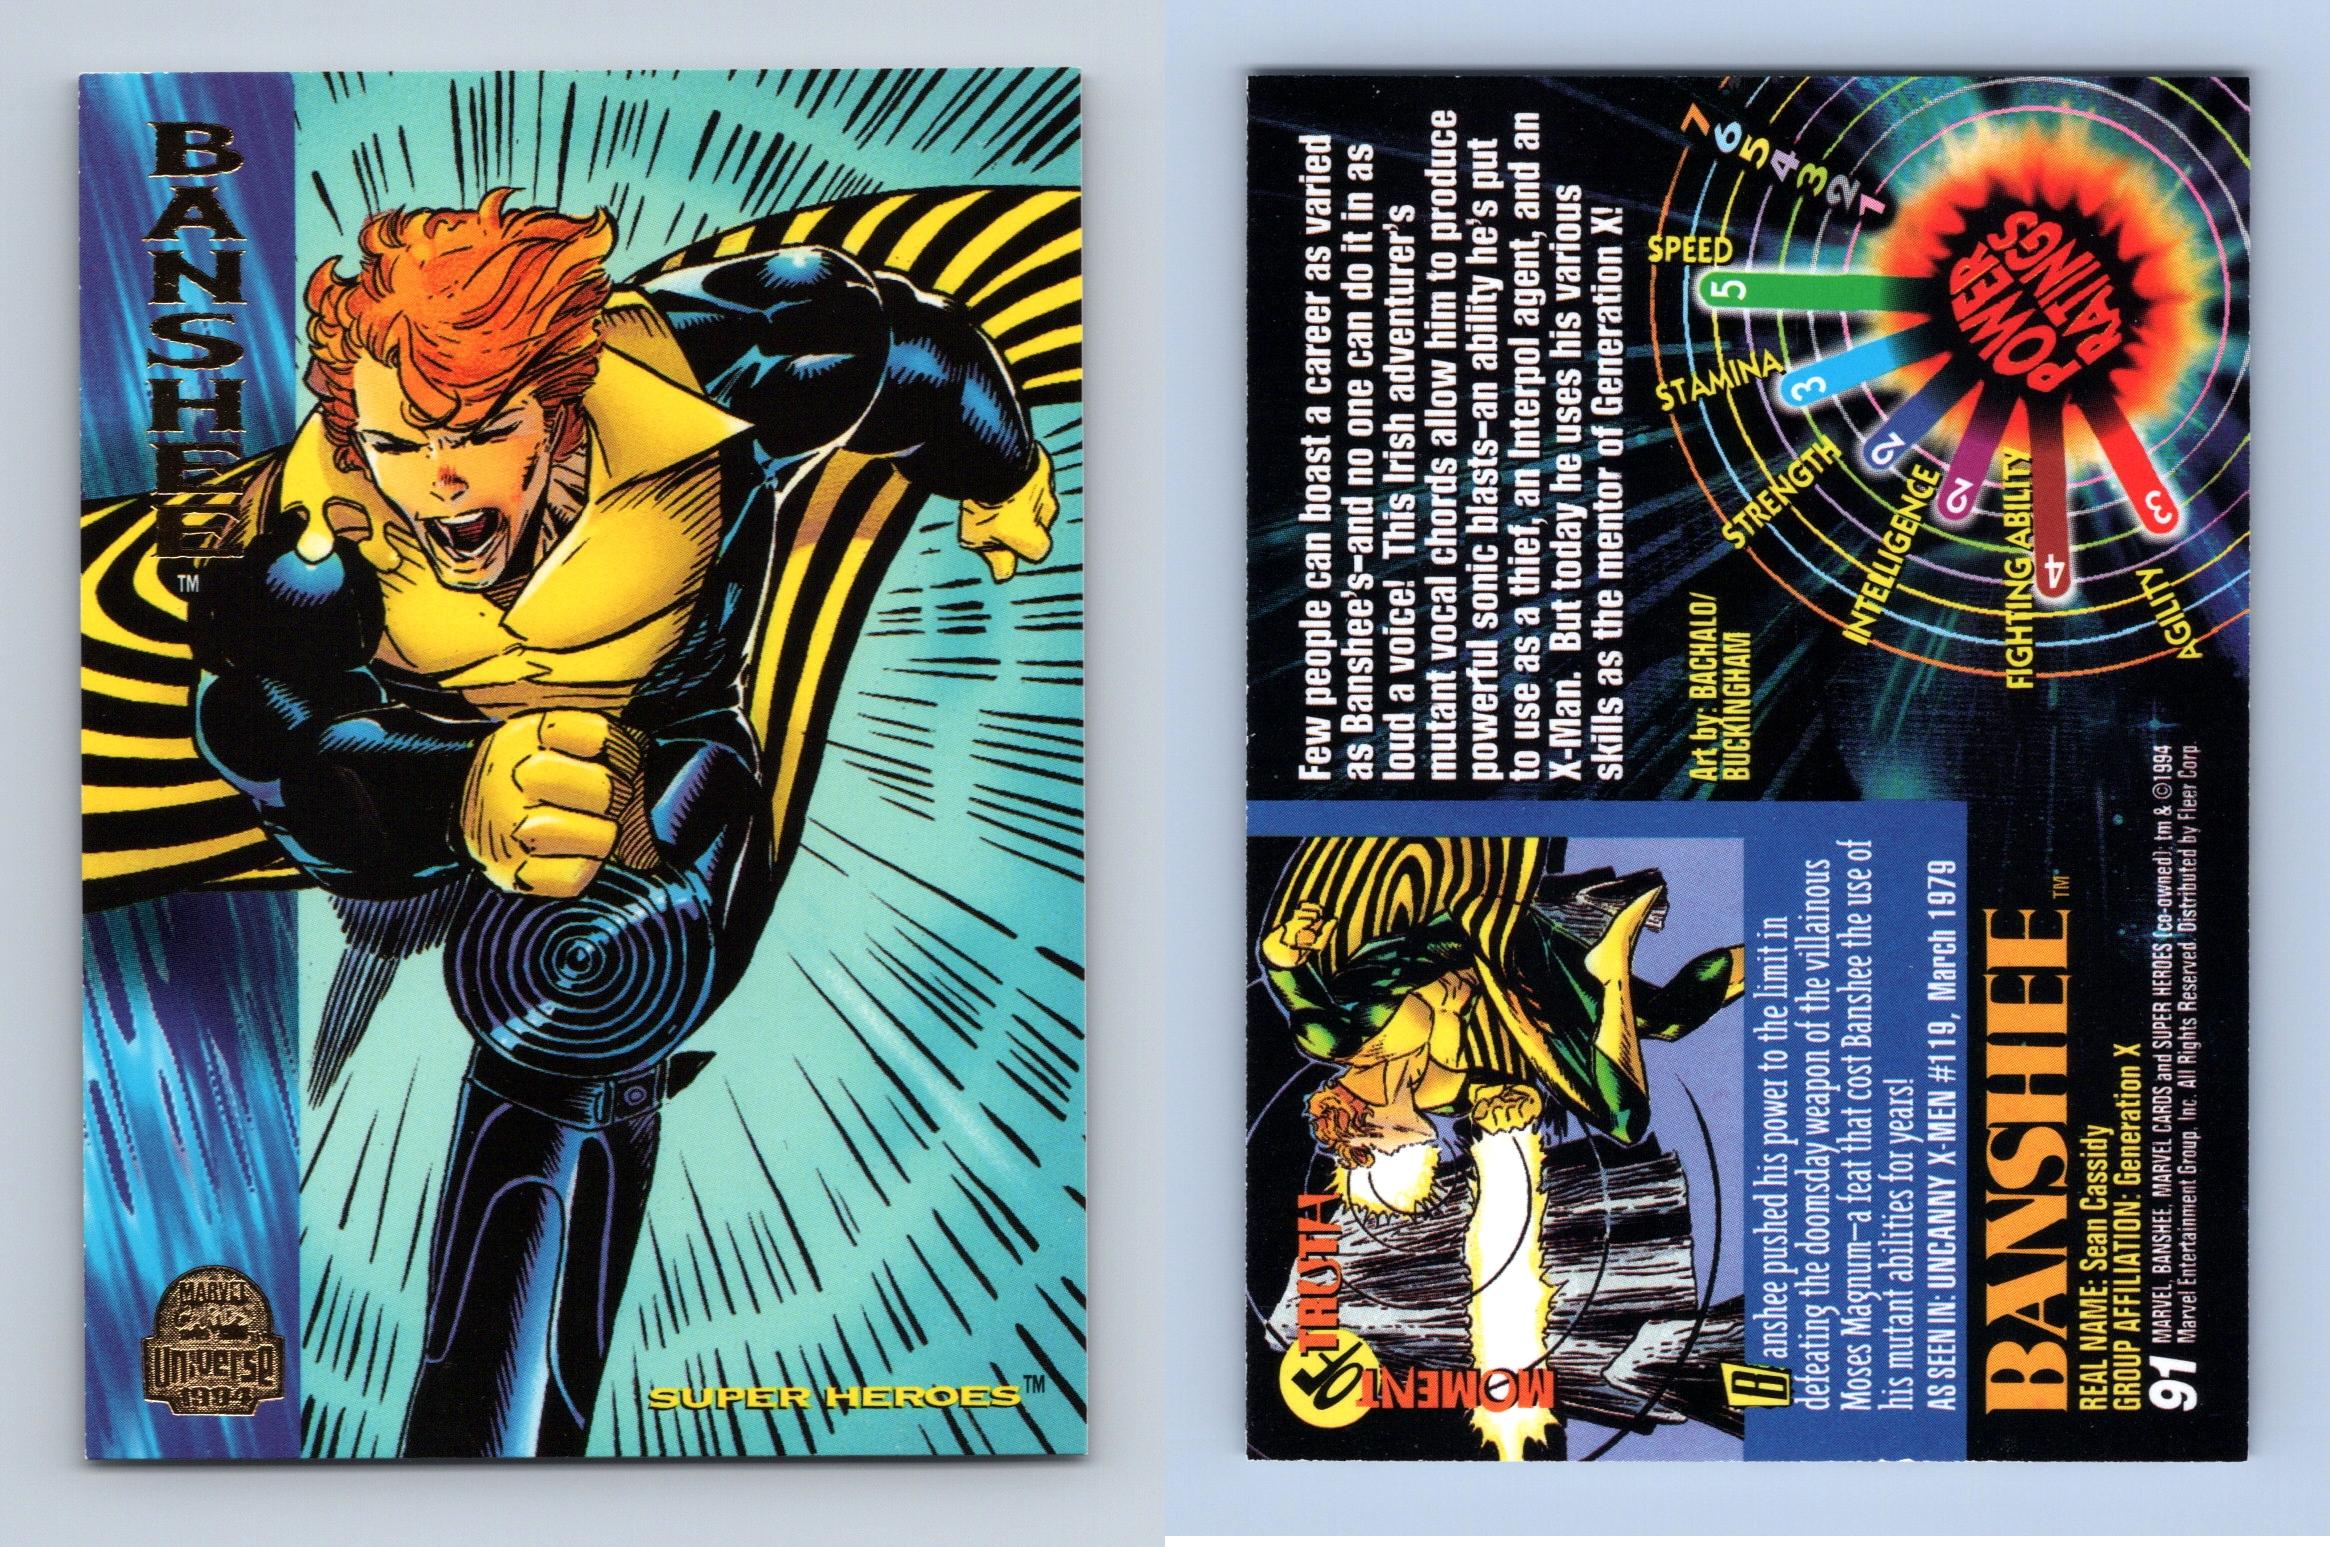 BANSHEE 1994 BASE Trading Card #91 Marvel Universe Series 5 